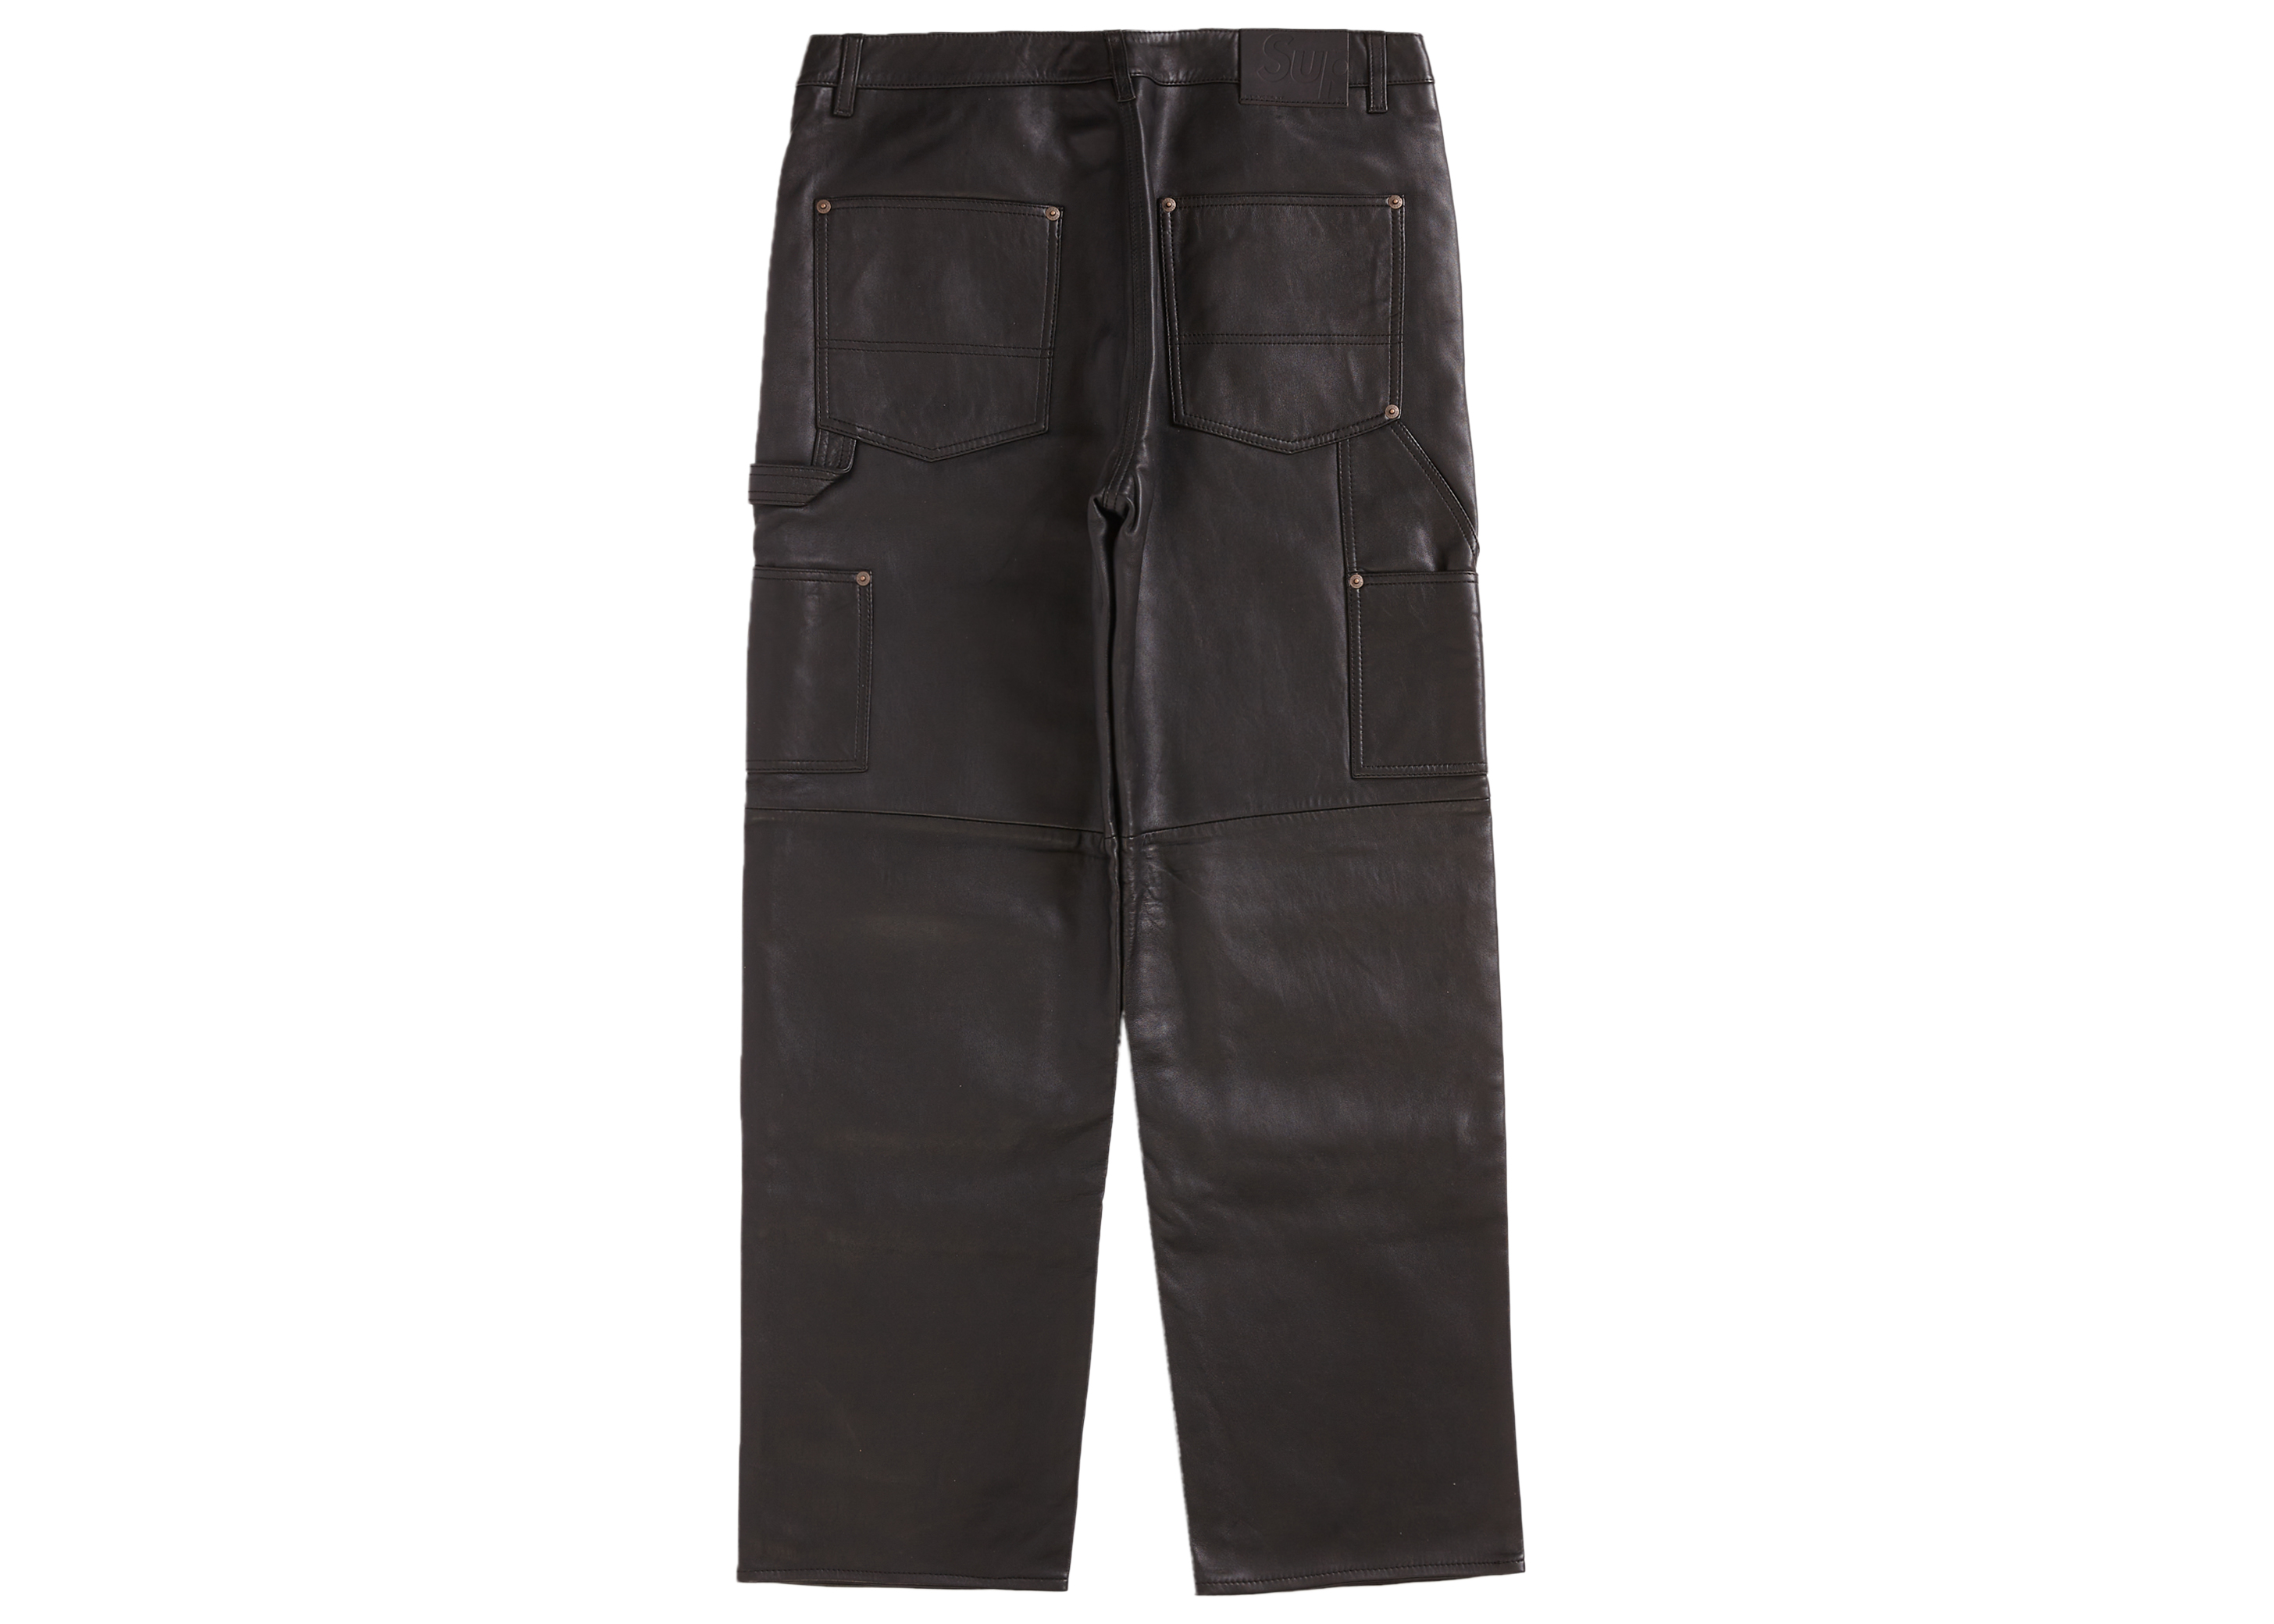 Supreme Leather Double Knee Painter Pant Black